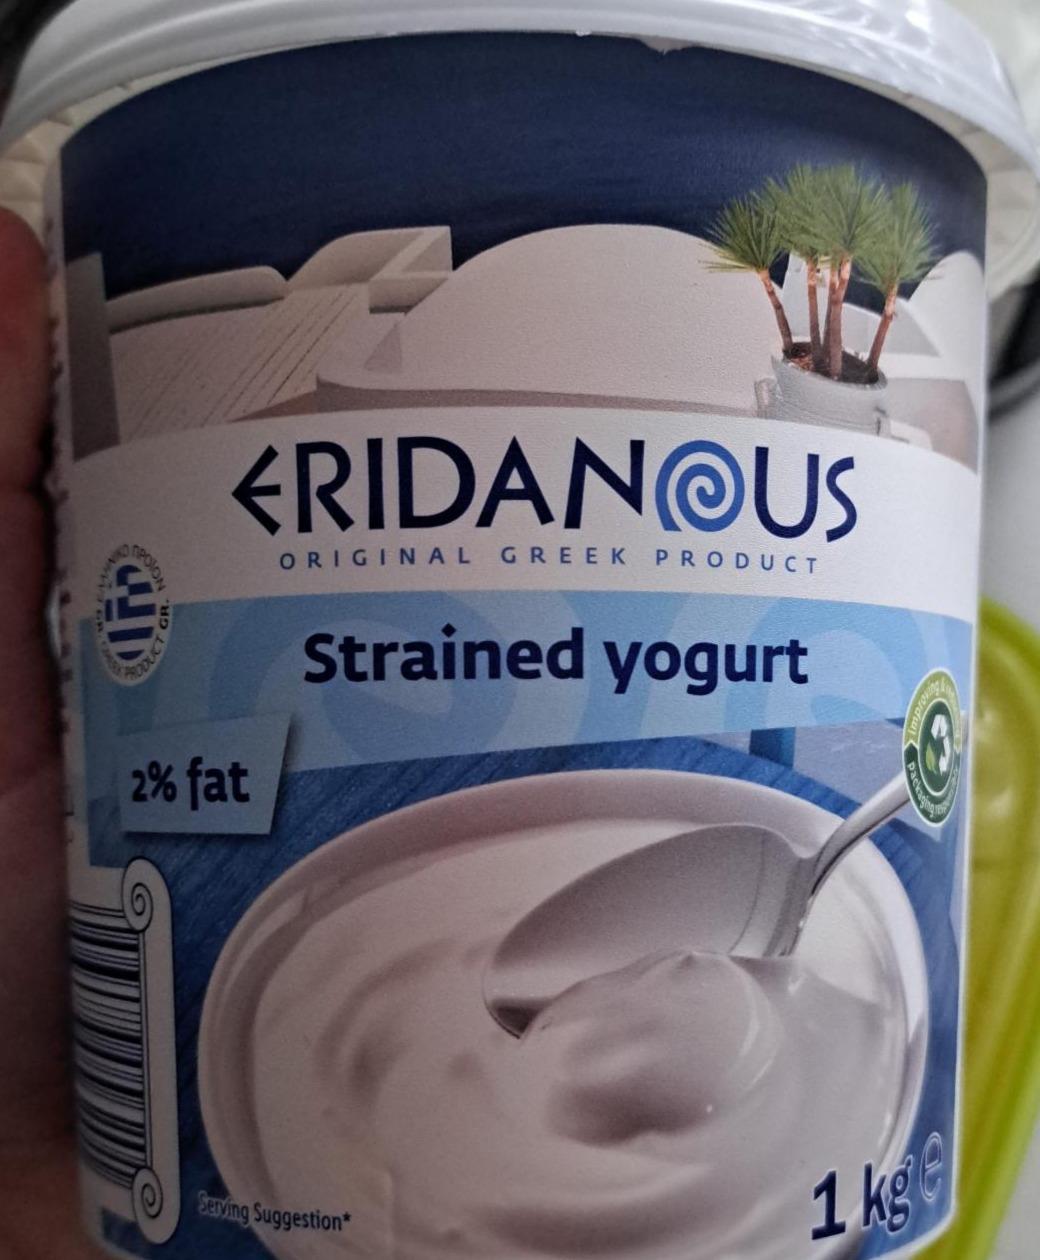 Fotografie - Natural Greek Yogurt Eridanous